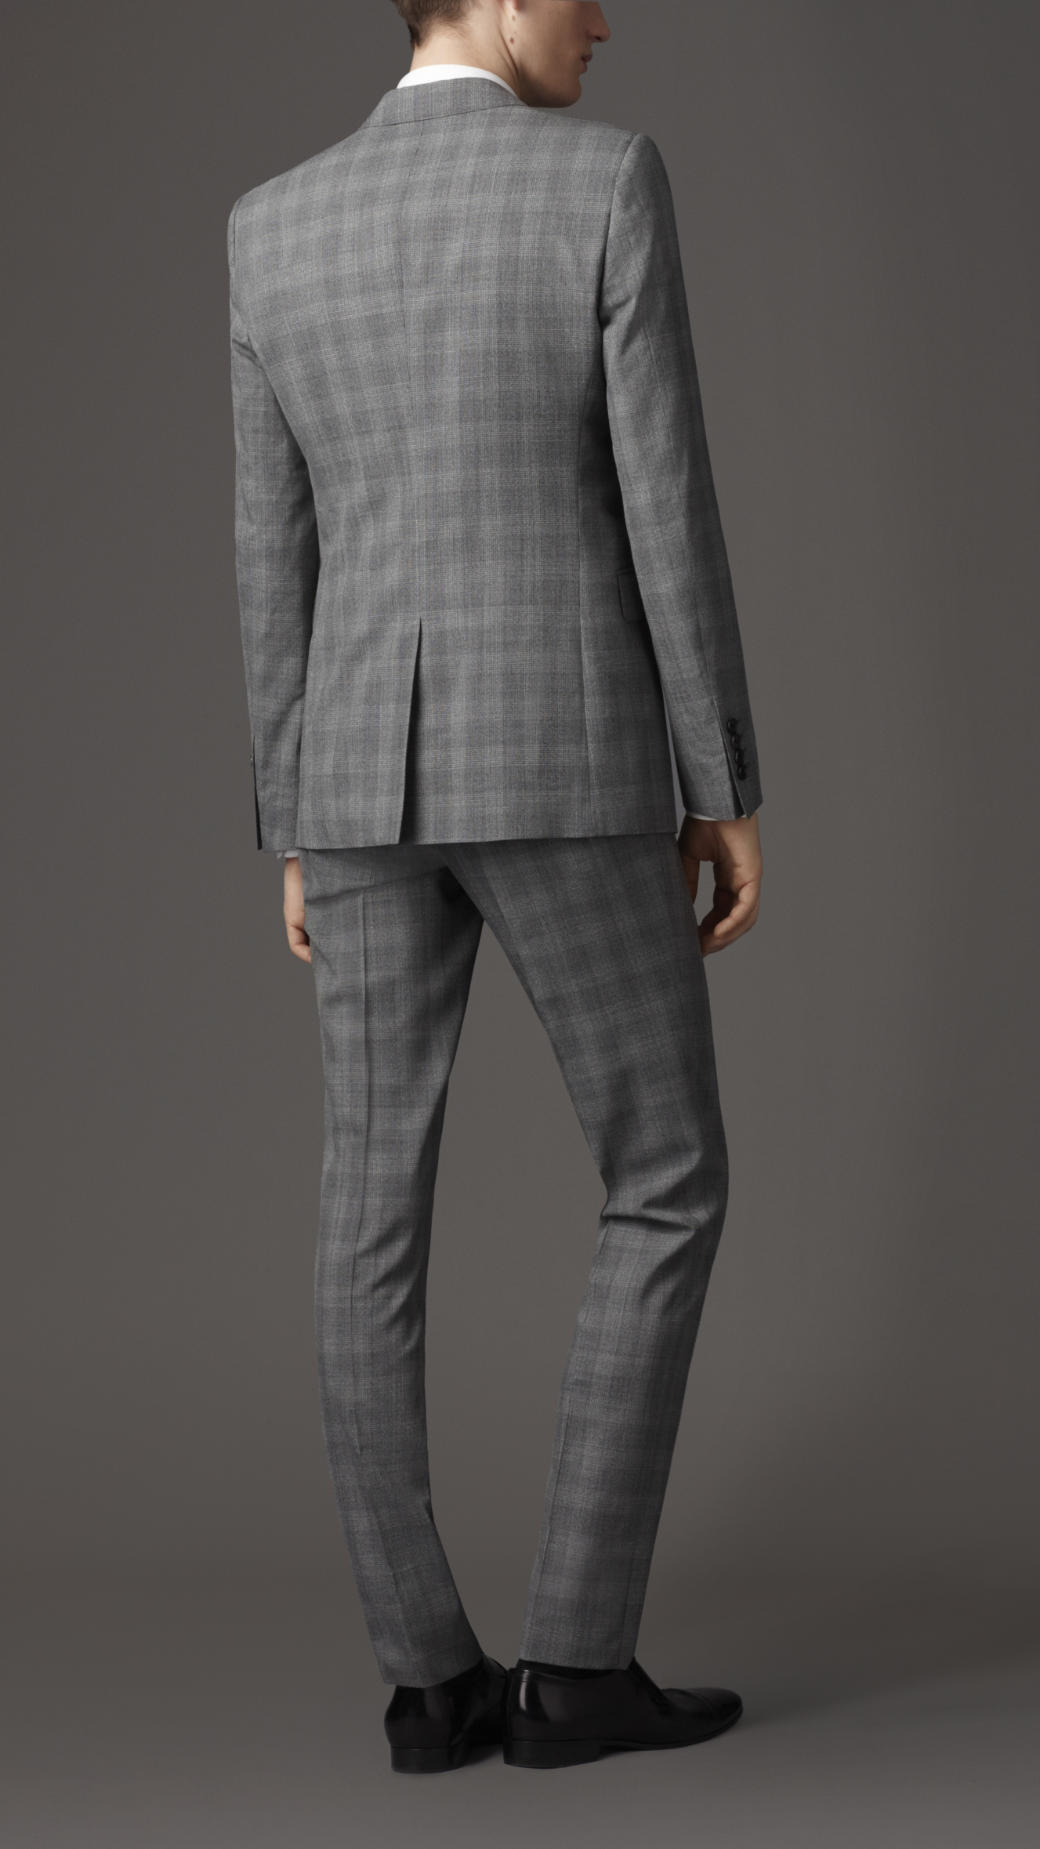 Burberry Slim Fit Virgin Wool Check Suit In Pale Grey Melange Gray For Men Lyst